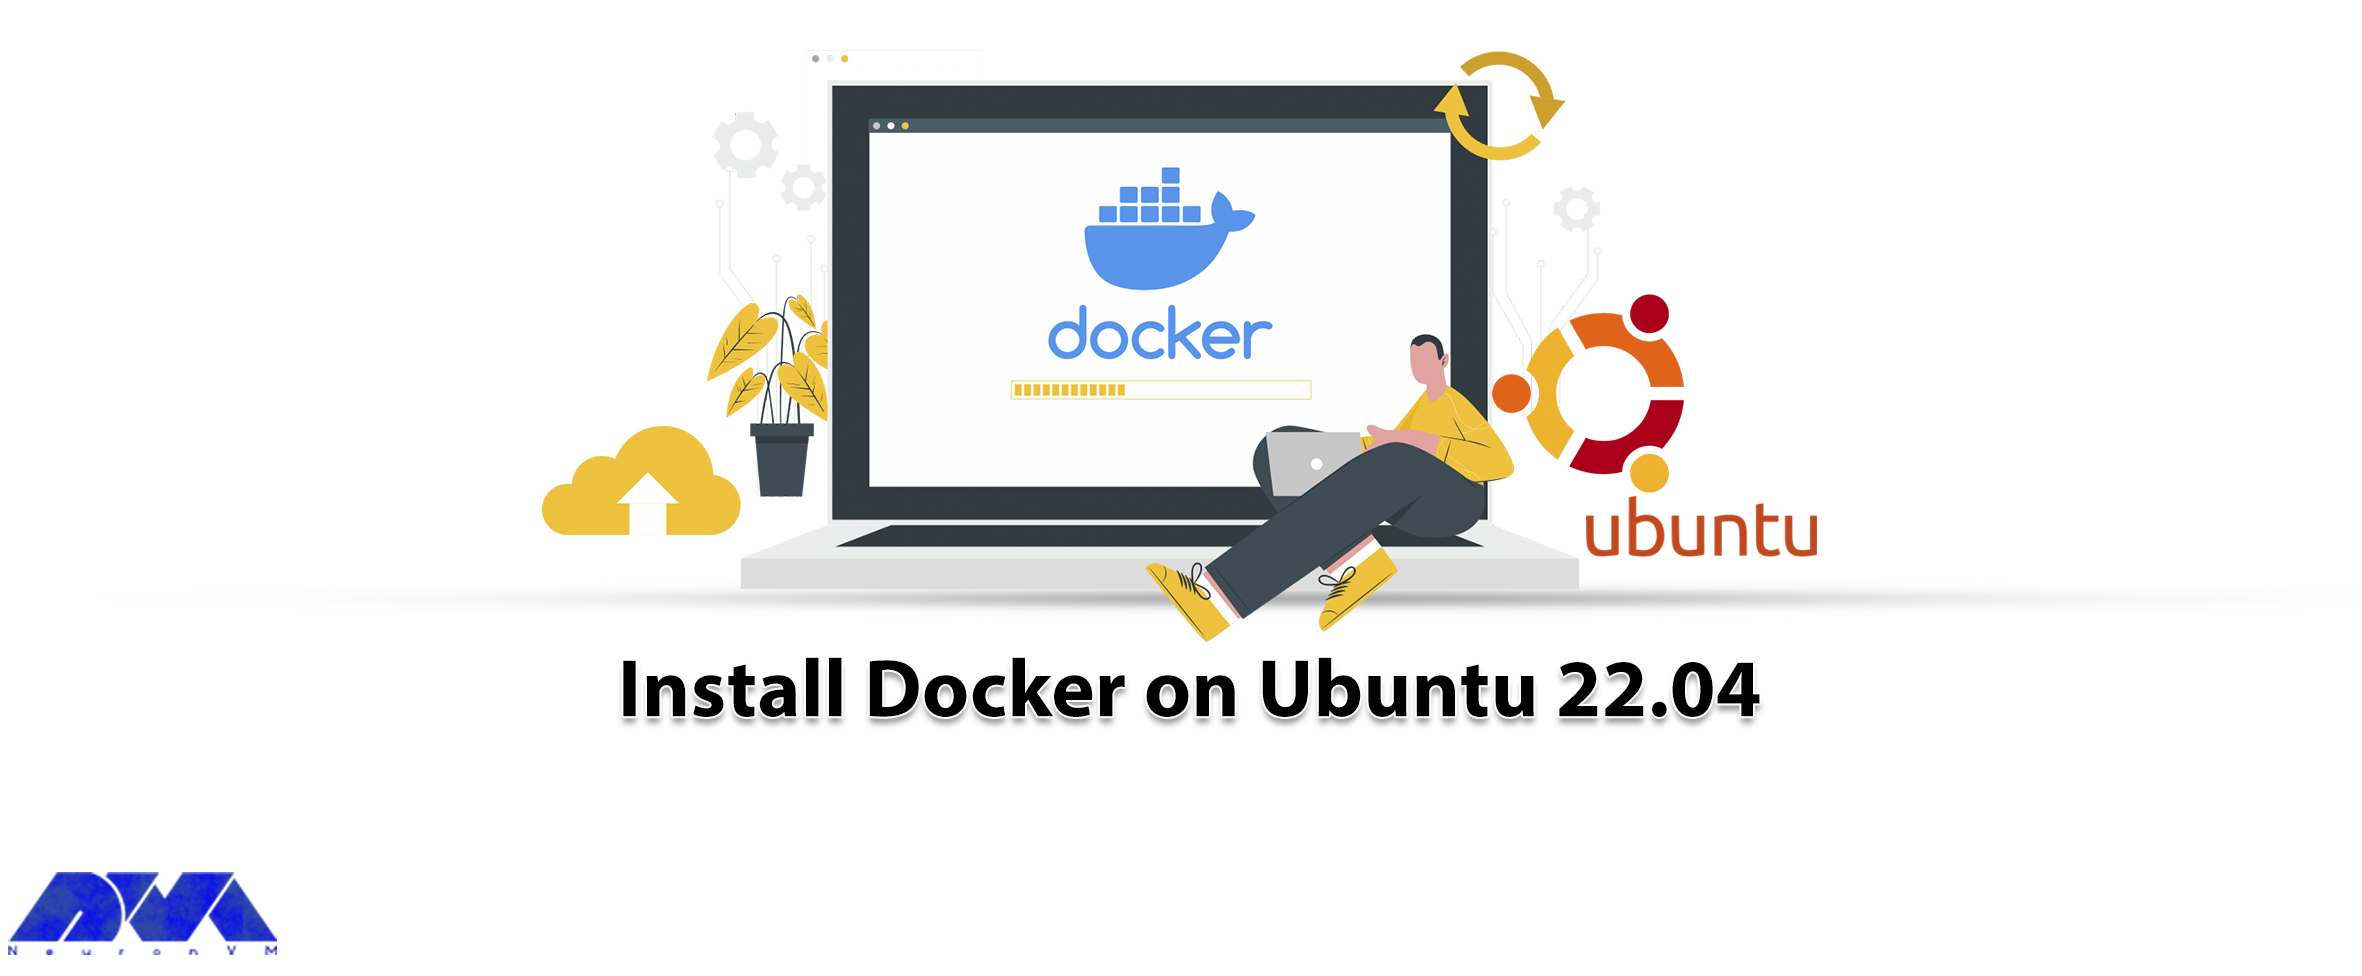 How to Install Docker on Ubuntu 22.04 - NeuronVM